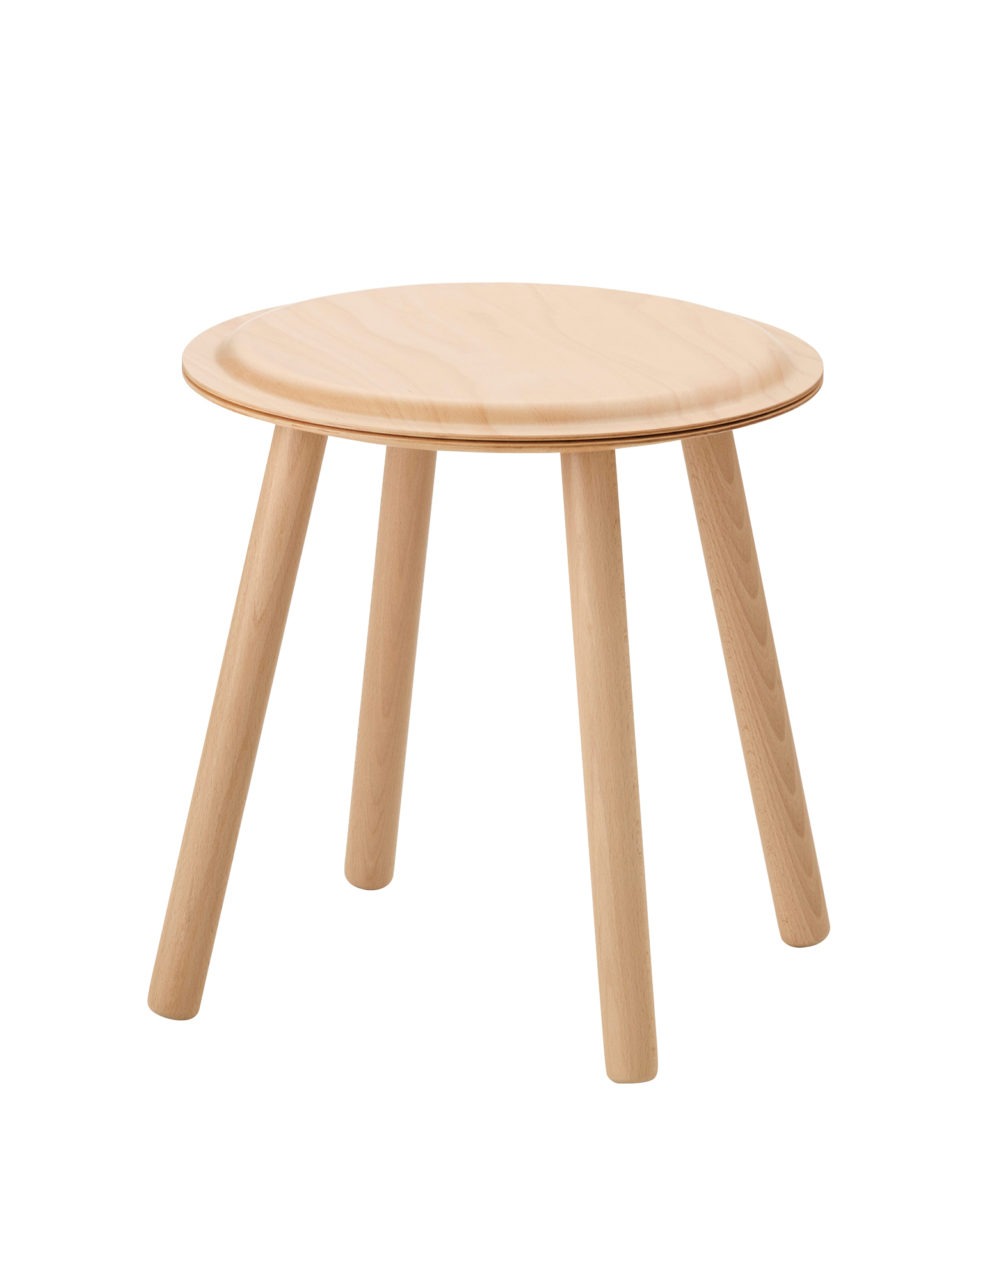 IKEA PS side table/stool 2017.